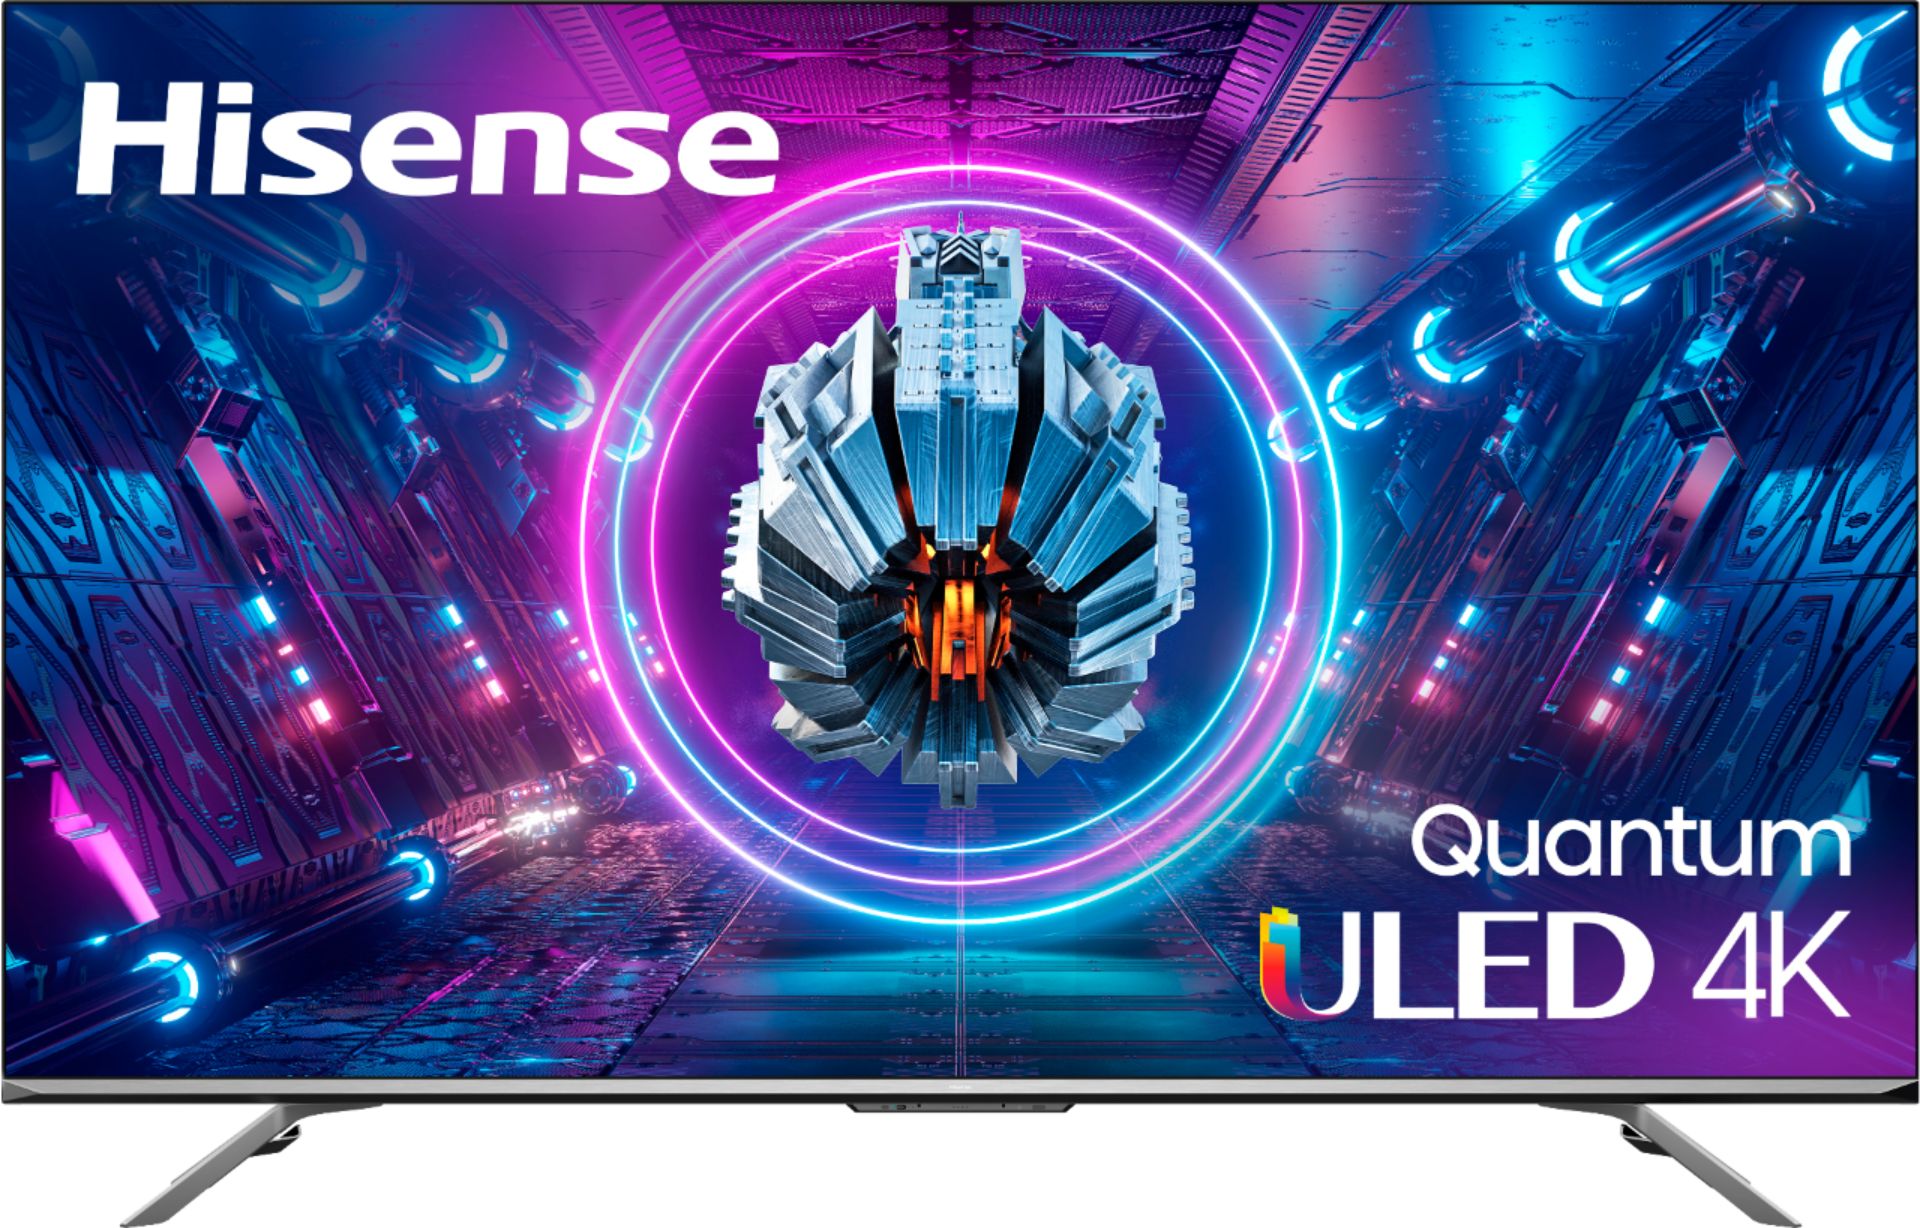 Hisense – 55″ Class U7G Series Quantum 4K ULED Android TV – Just $499.99 at Best Buy